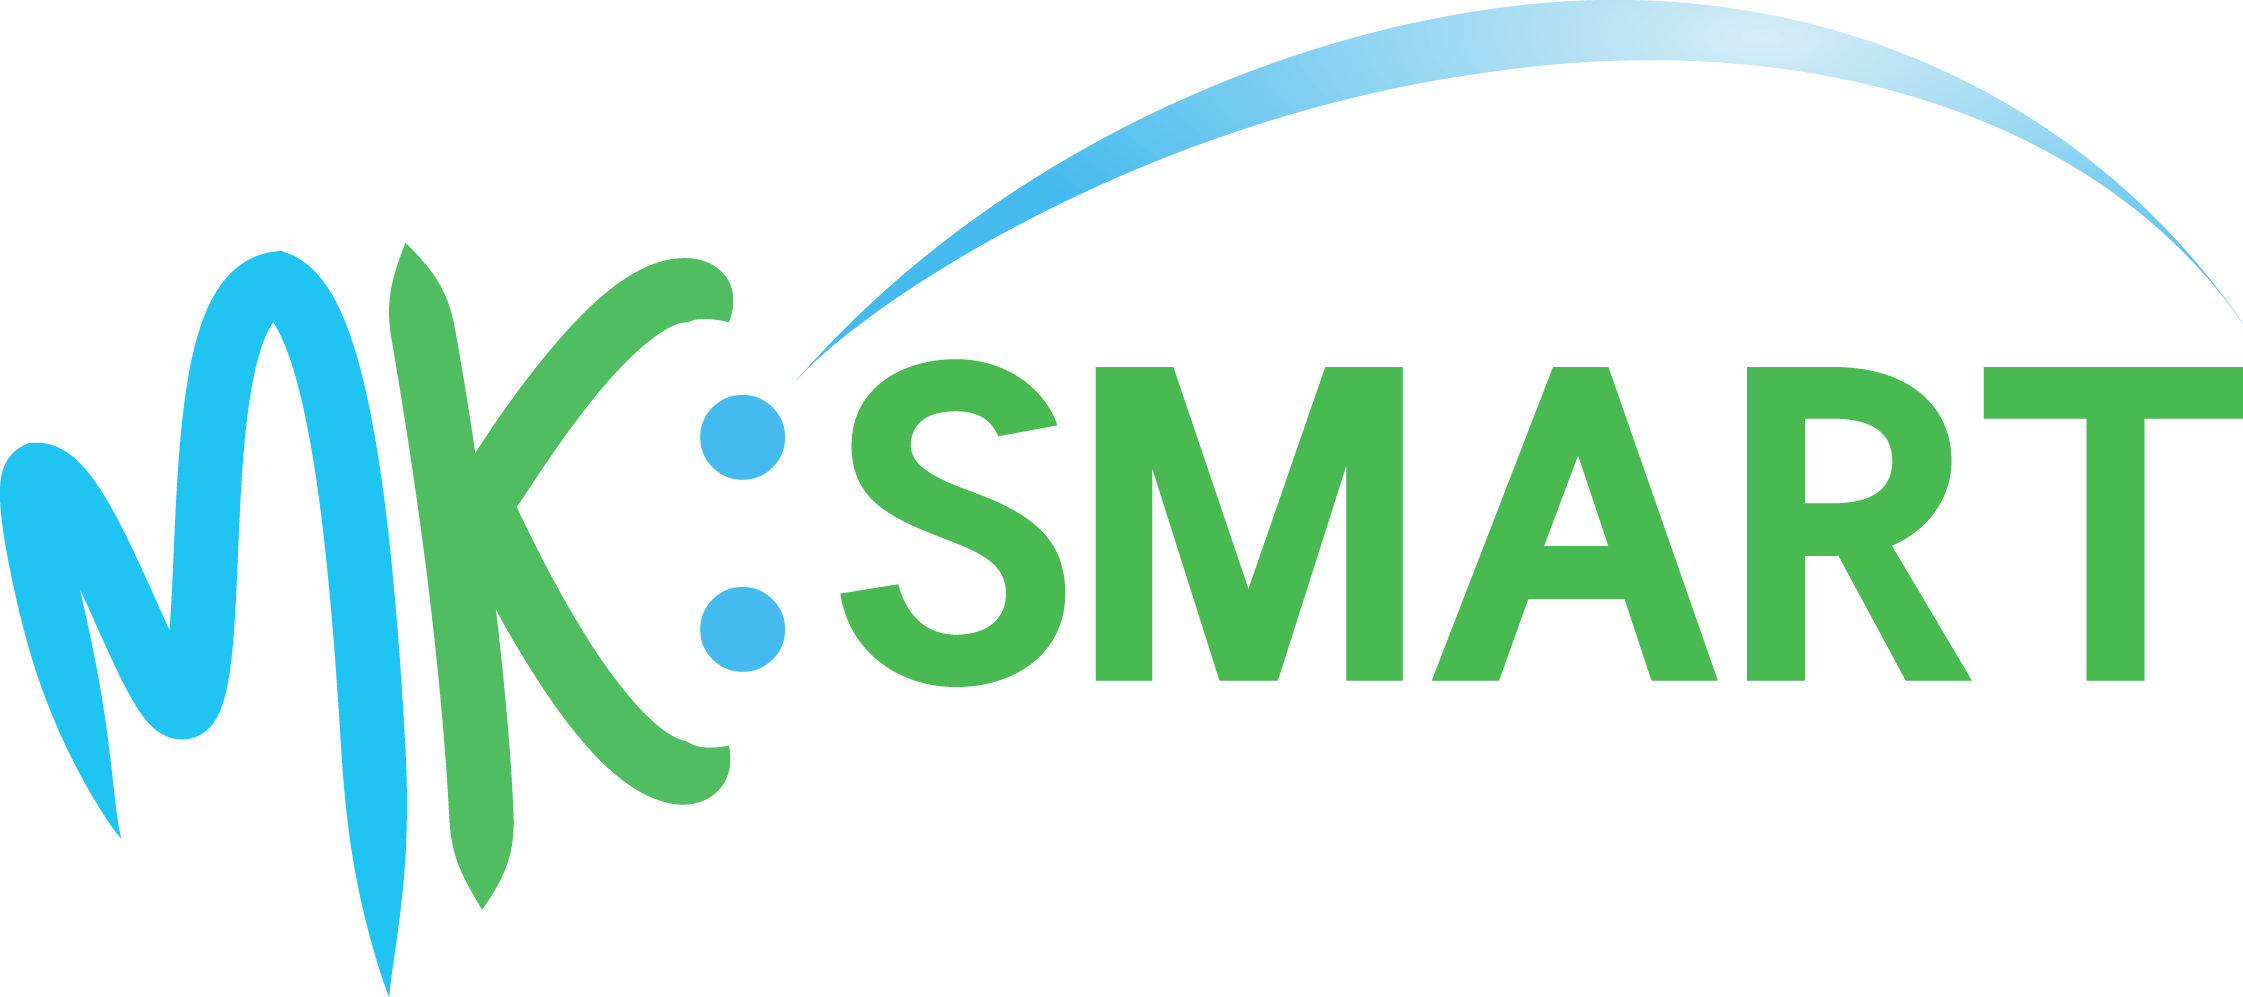 Get Smart Logo - Resources | MK:Smart